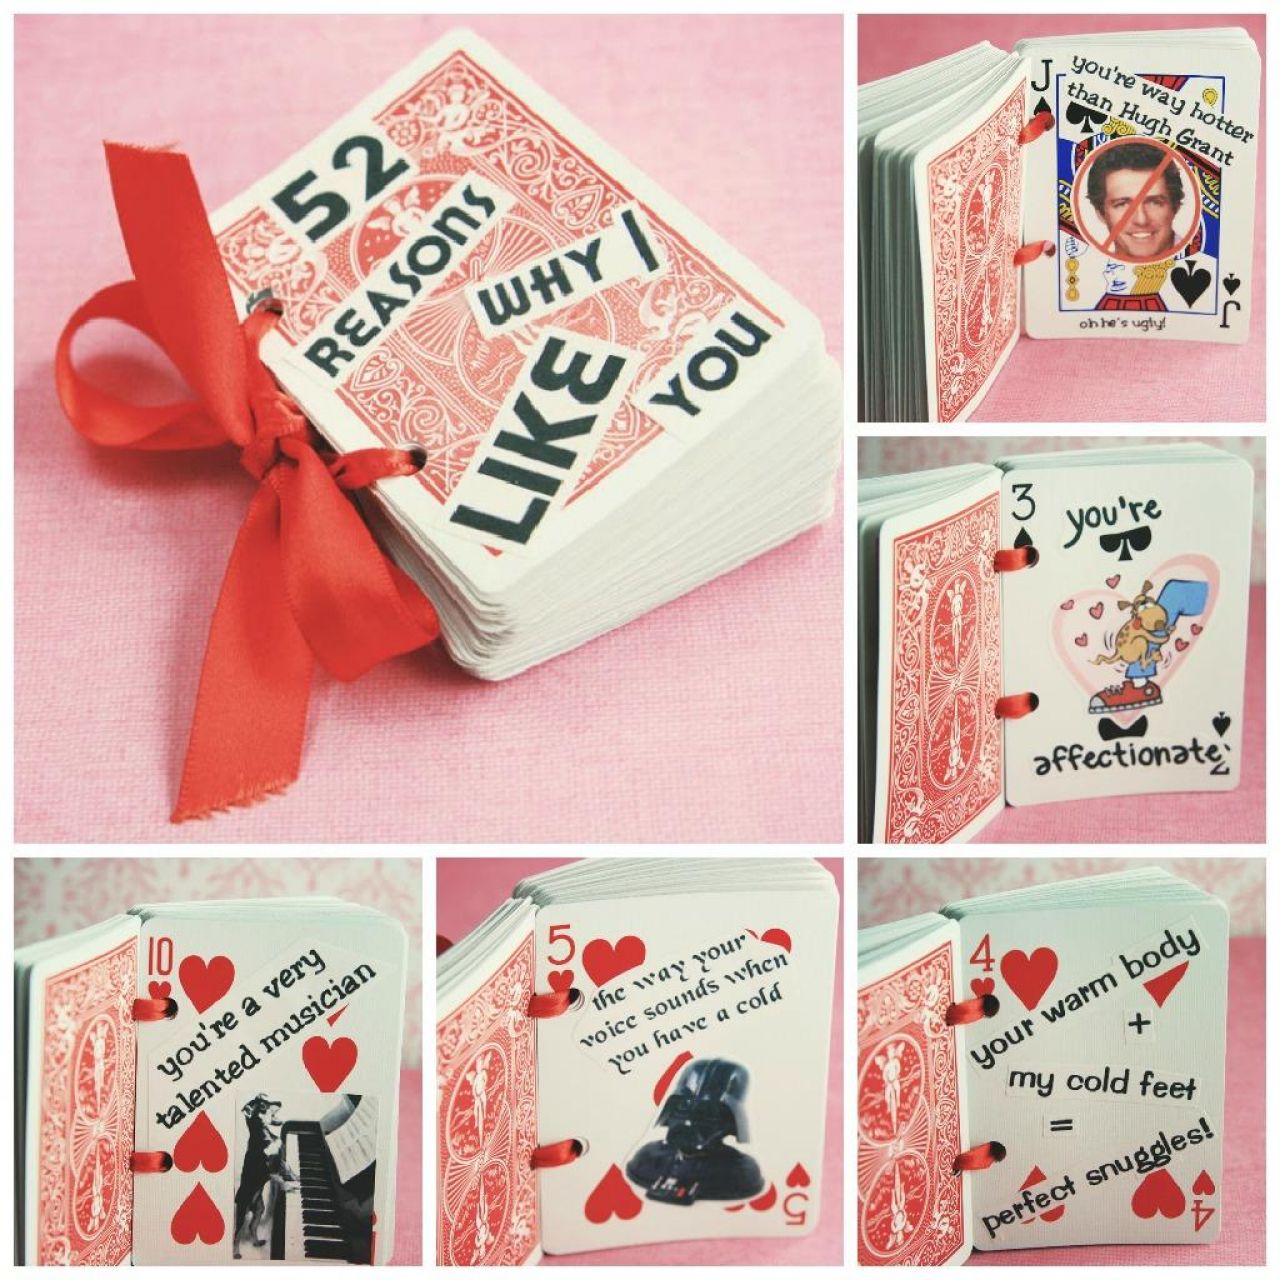 best valentine gift for bf